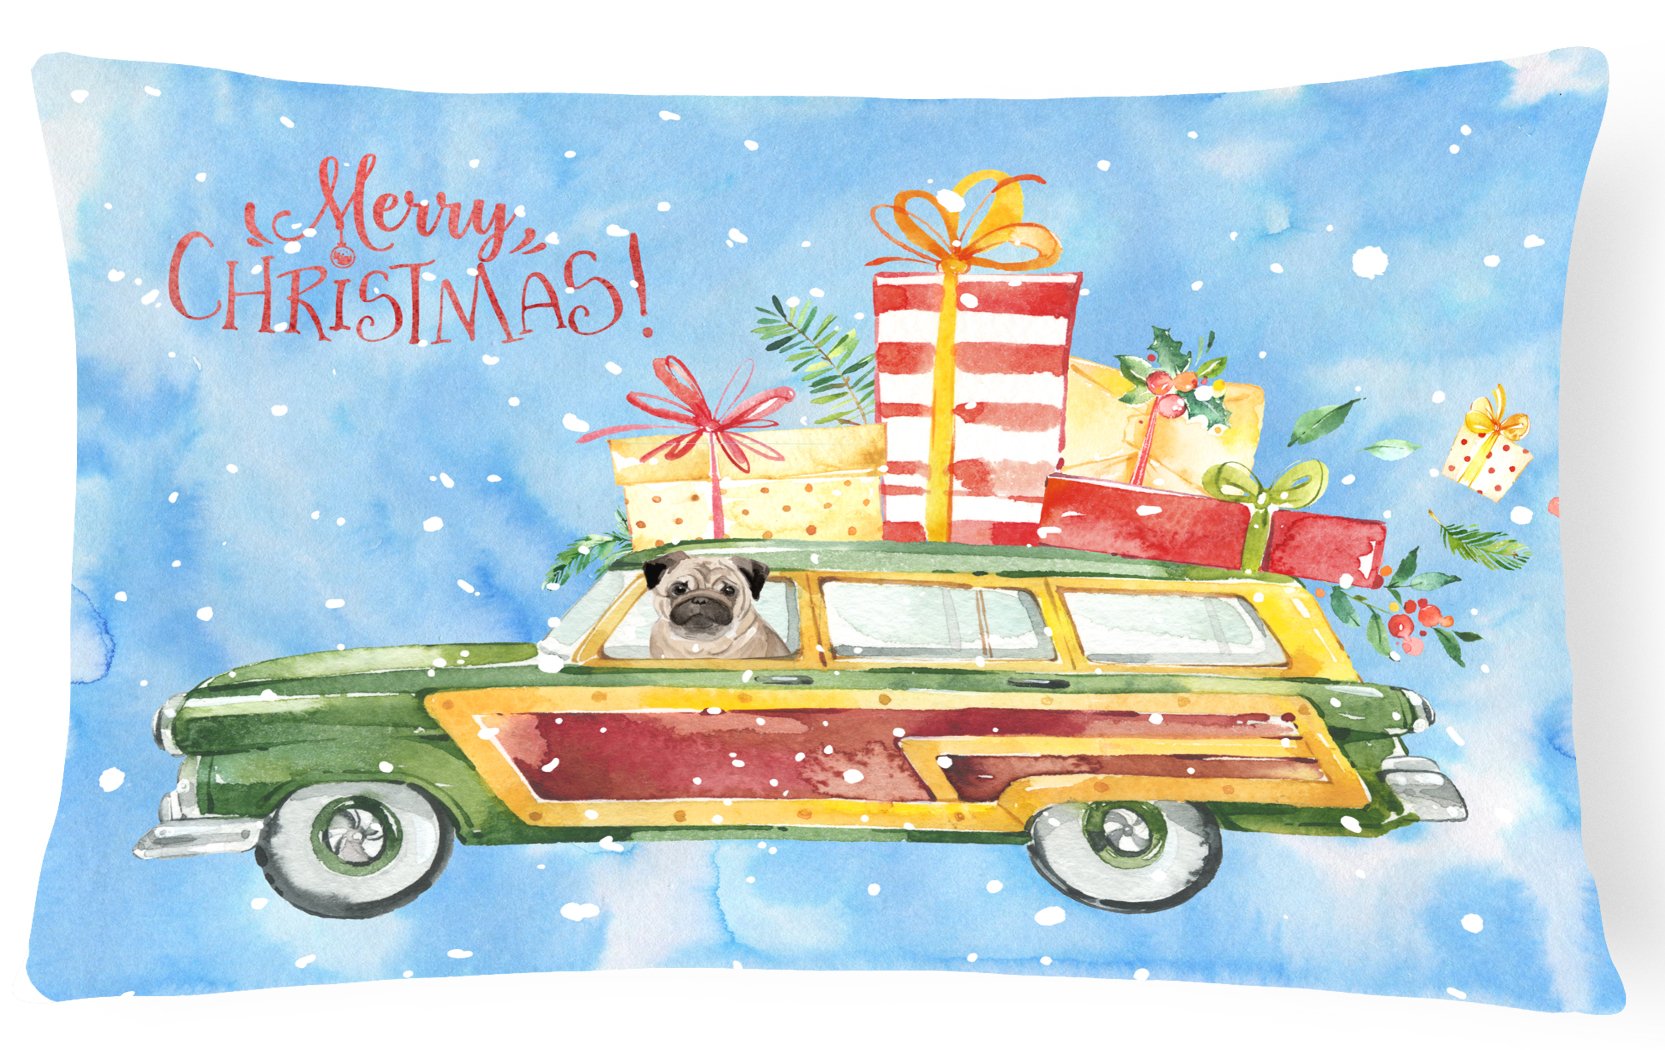 Merry Christmas Pug Canvas Fabric Decorative Pillow CK2463PW1216 by Caroline's Treasures